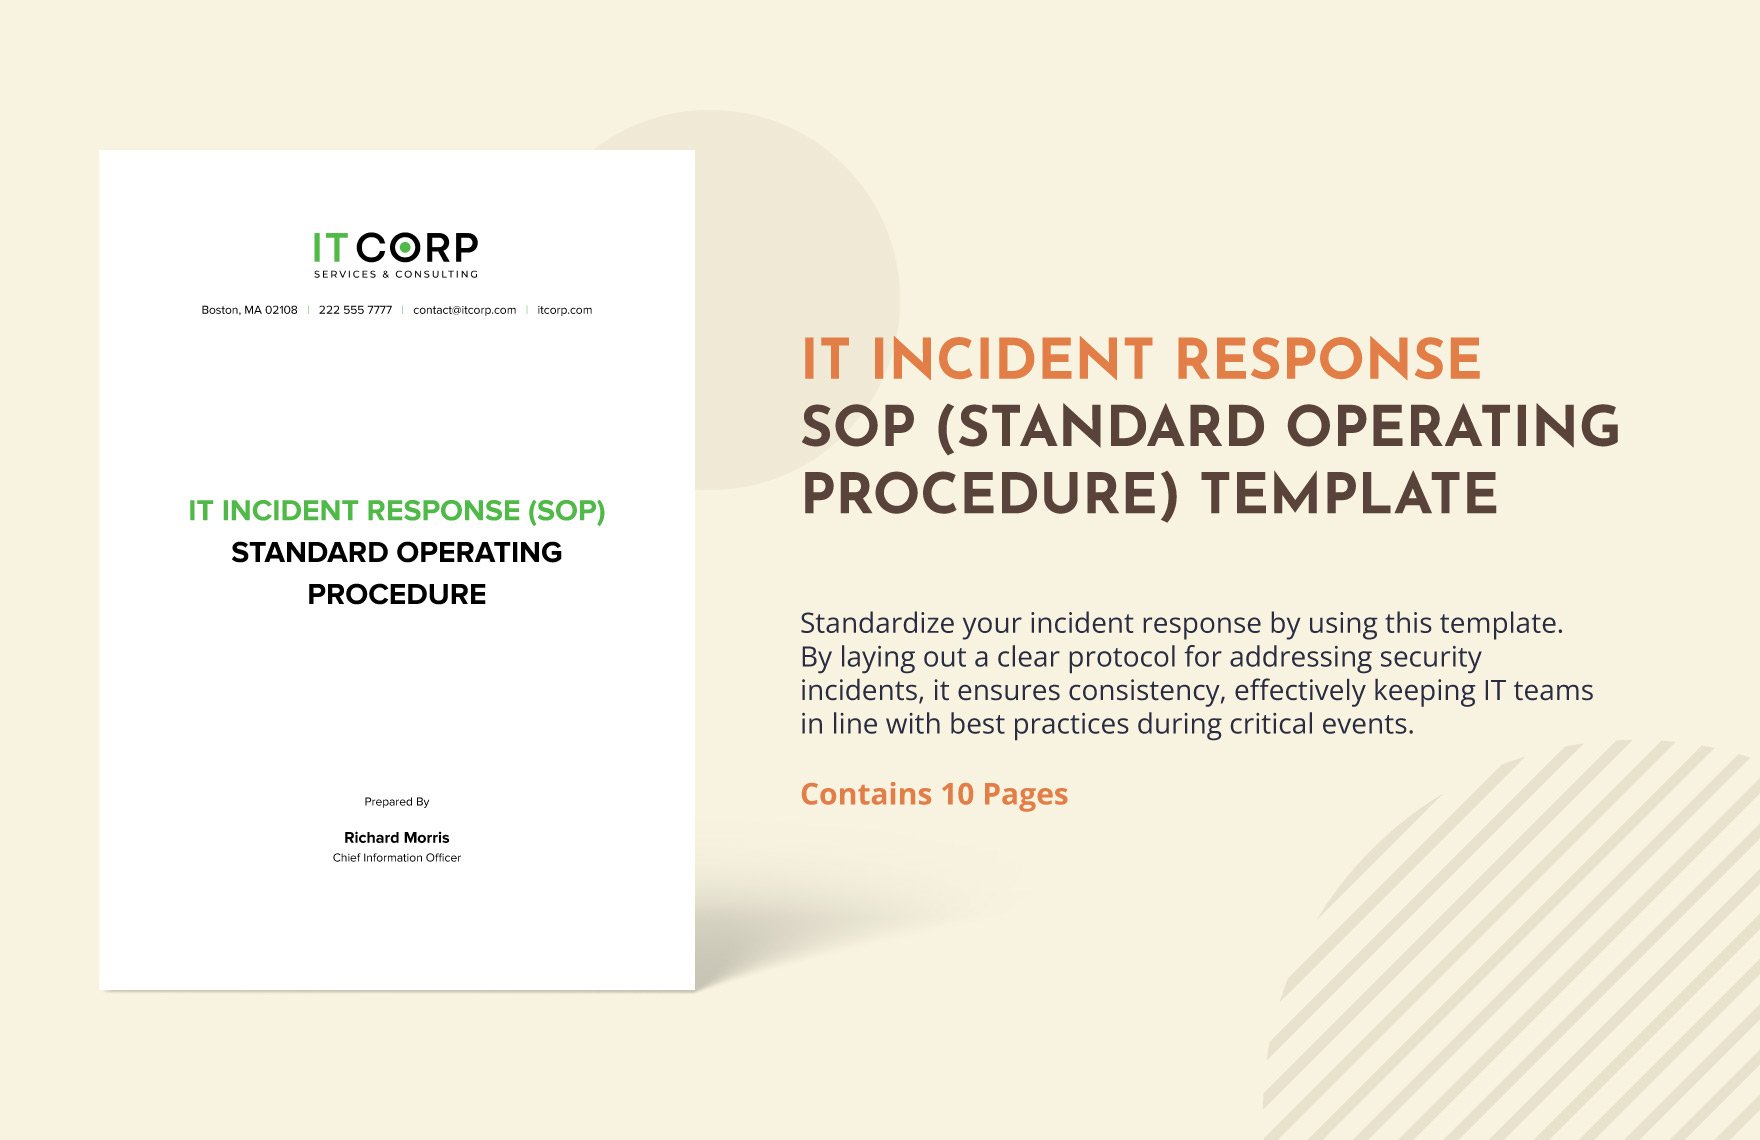 IT Incident Response SOP (Standard Operating Procedure) Template